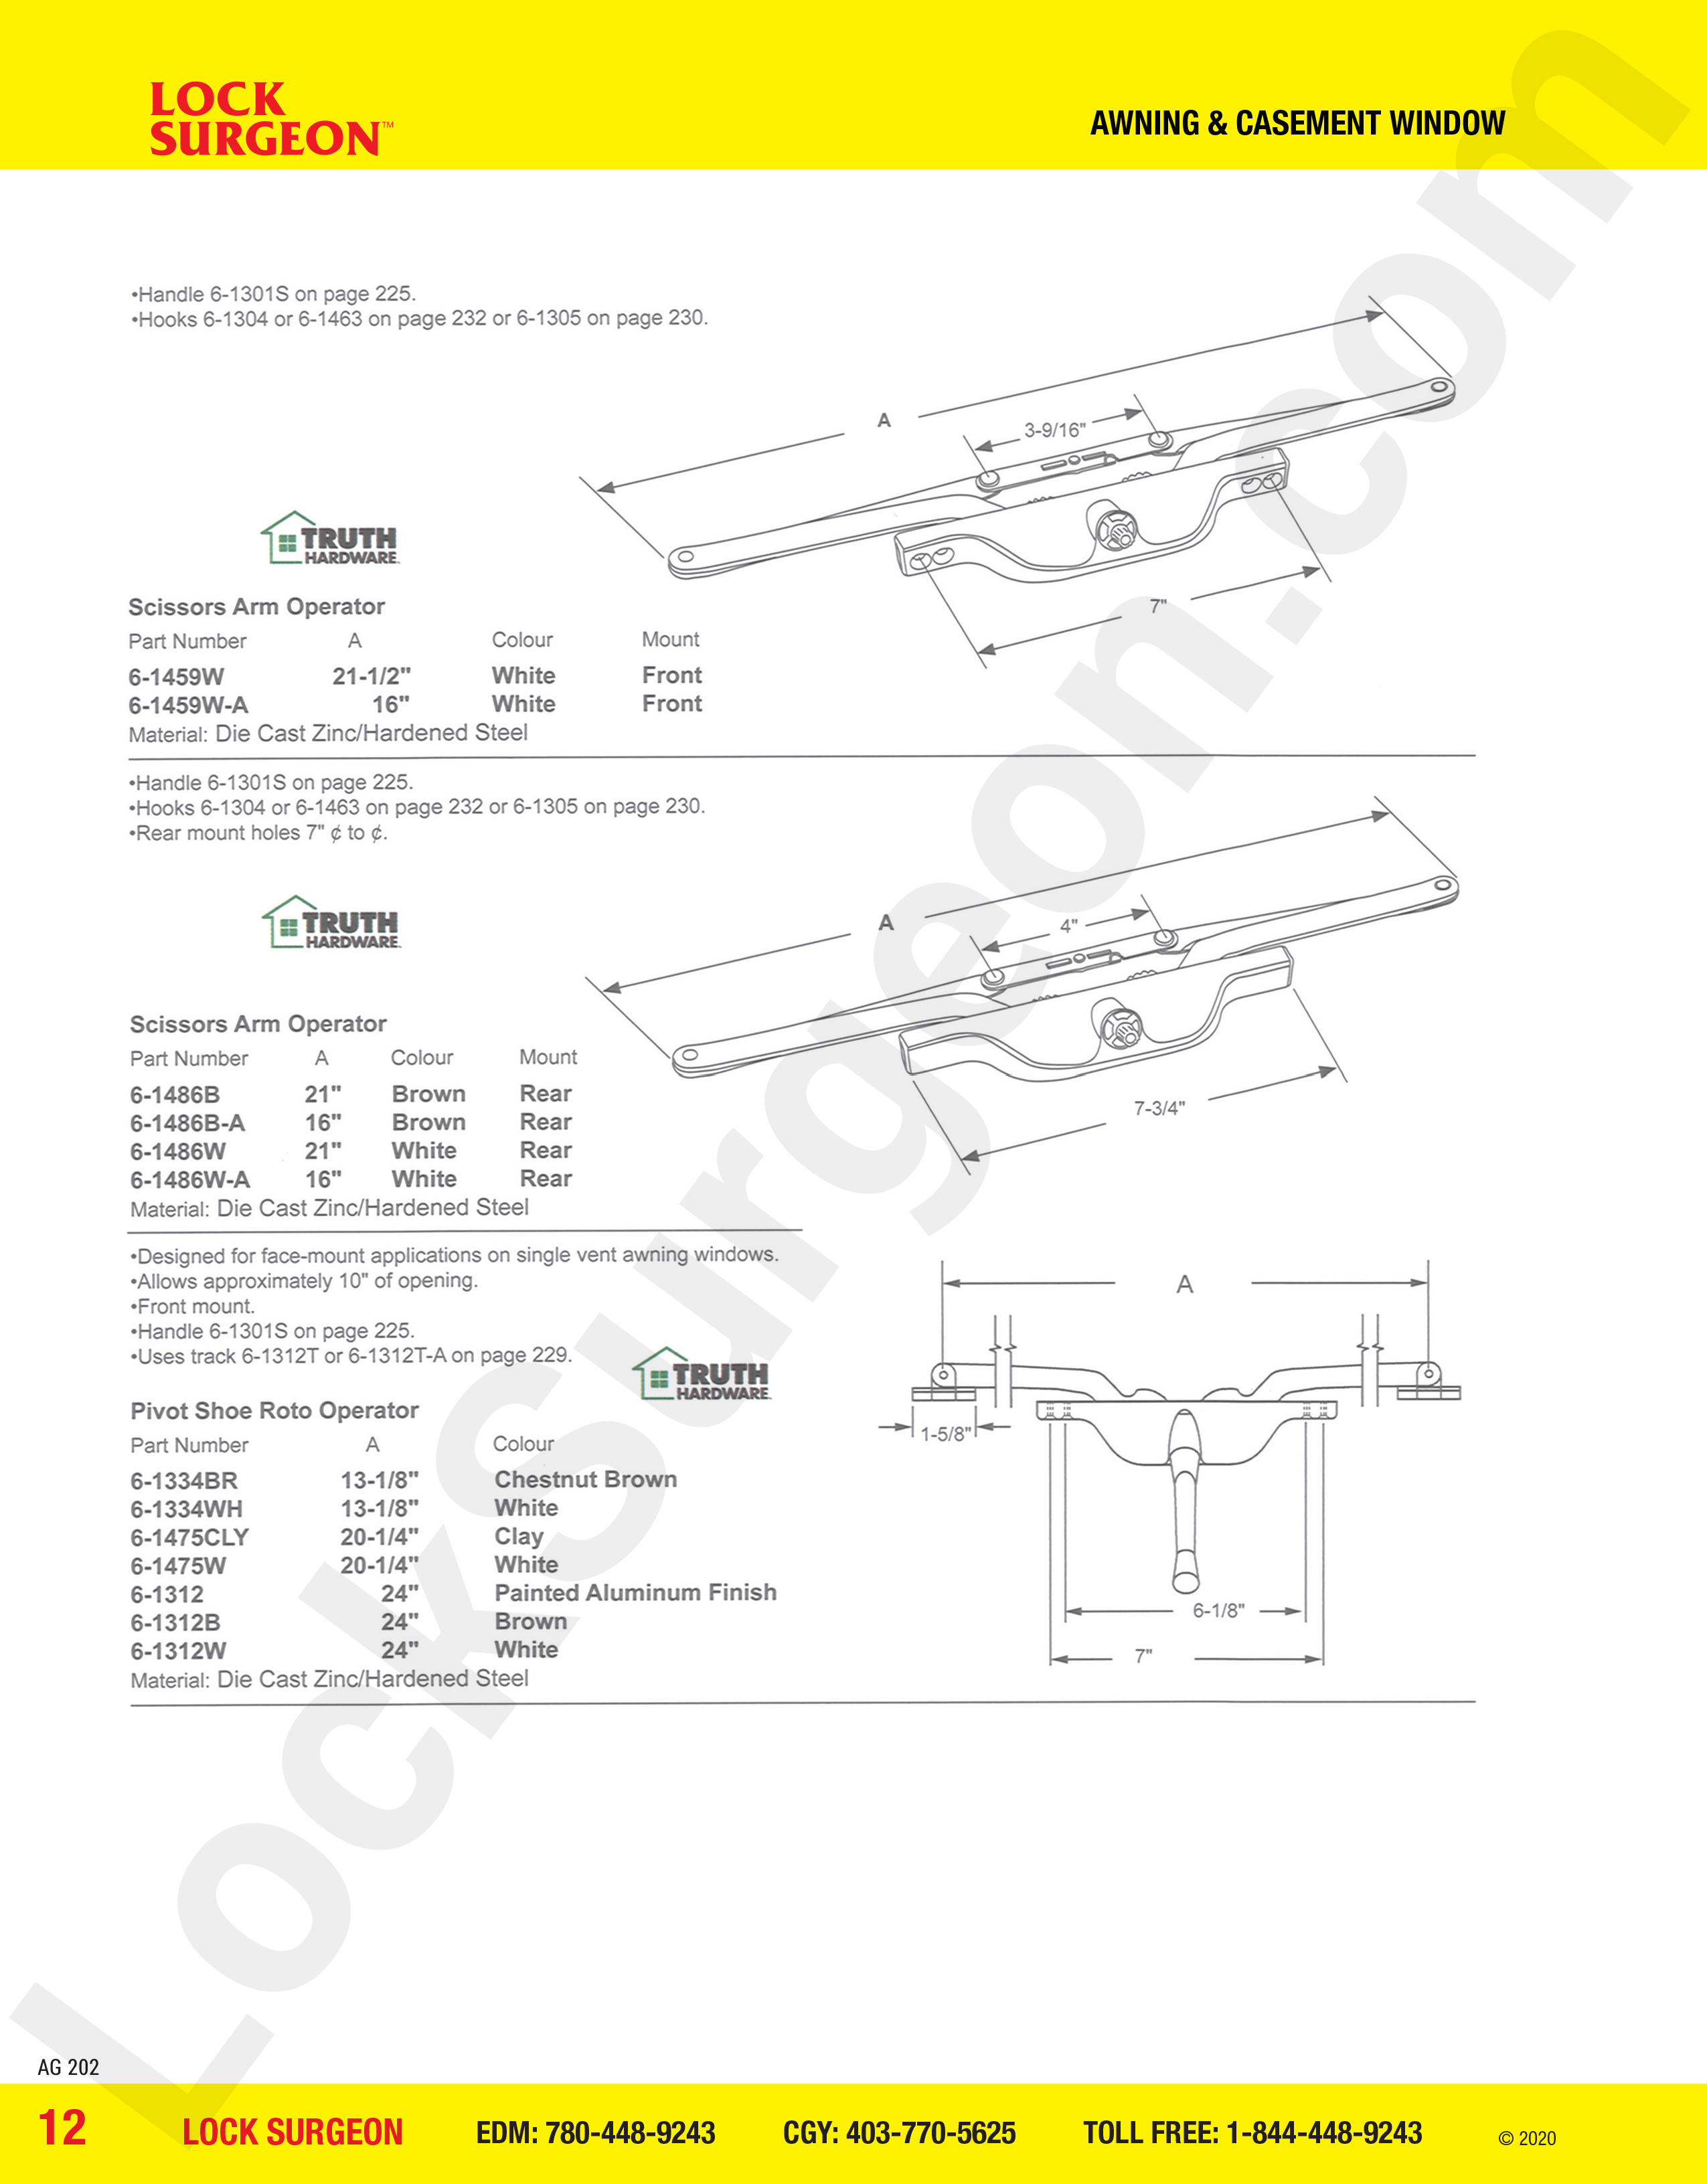 awning and casement window parts for ellipse scissor arm & pivot shoe operators